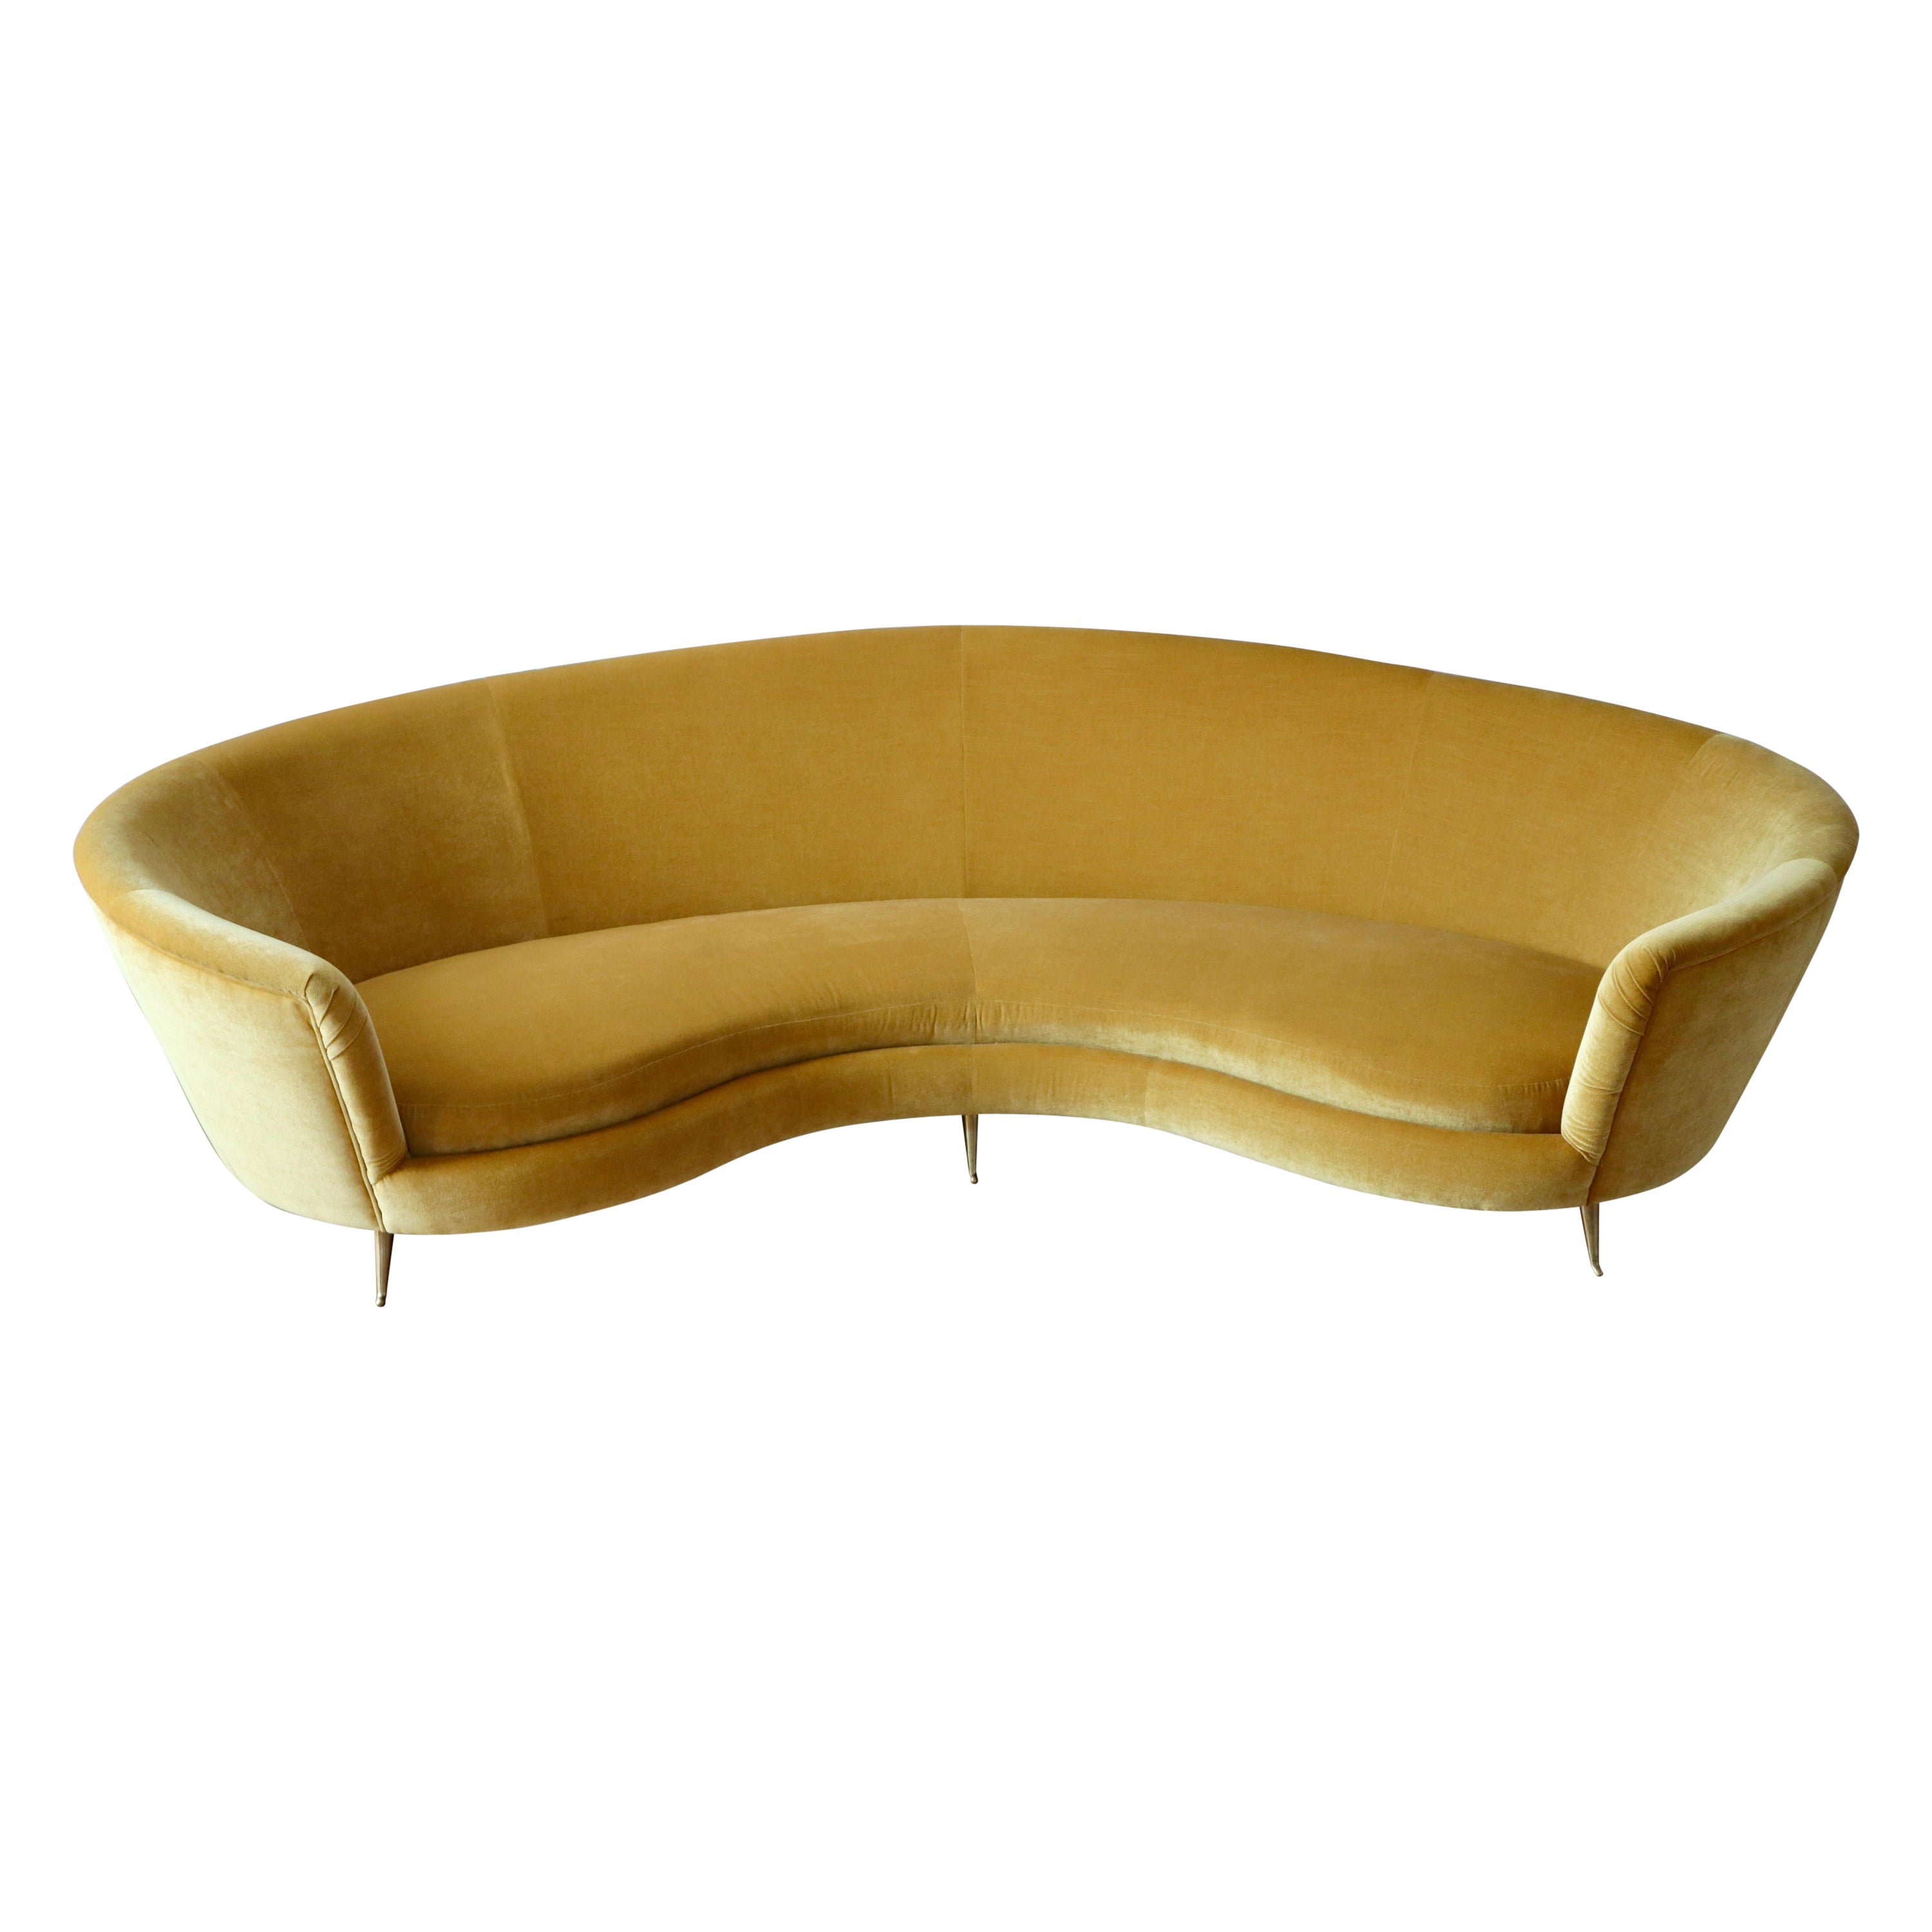 XXL Gio Ponti Style Large Mid Century Modern Italian Crescent Canapé Sofa